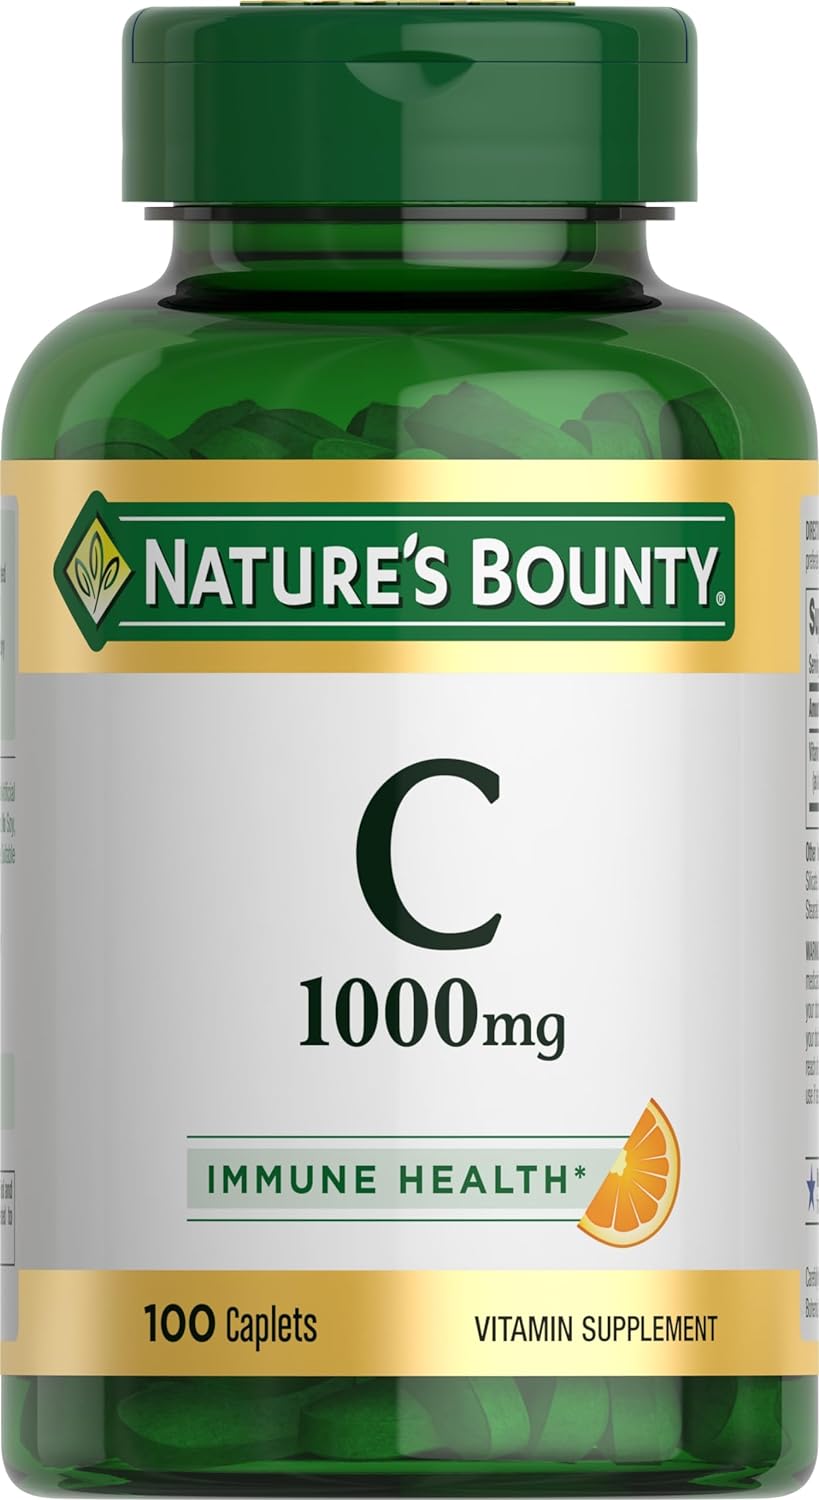 Nature's Bounty Vitamin C 1000mg, Immune Support Supplement, Powerful Antioxidant, 1 Pack, 100 Caplets